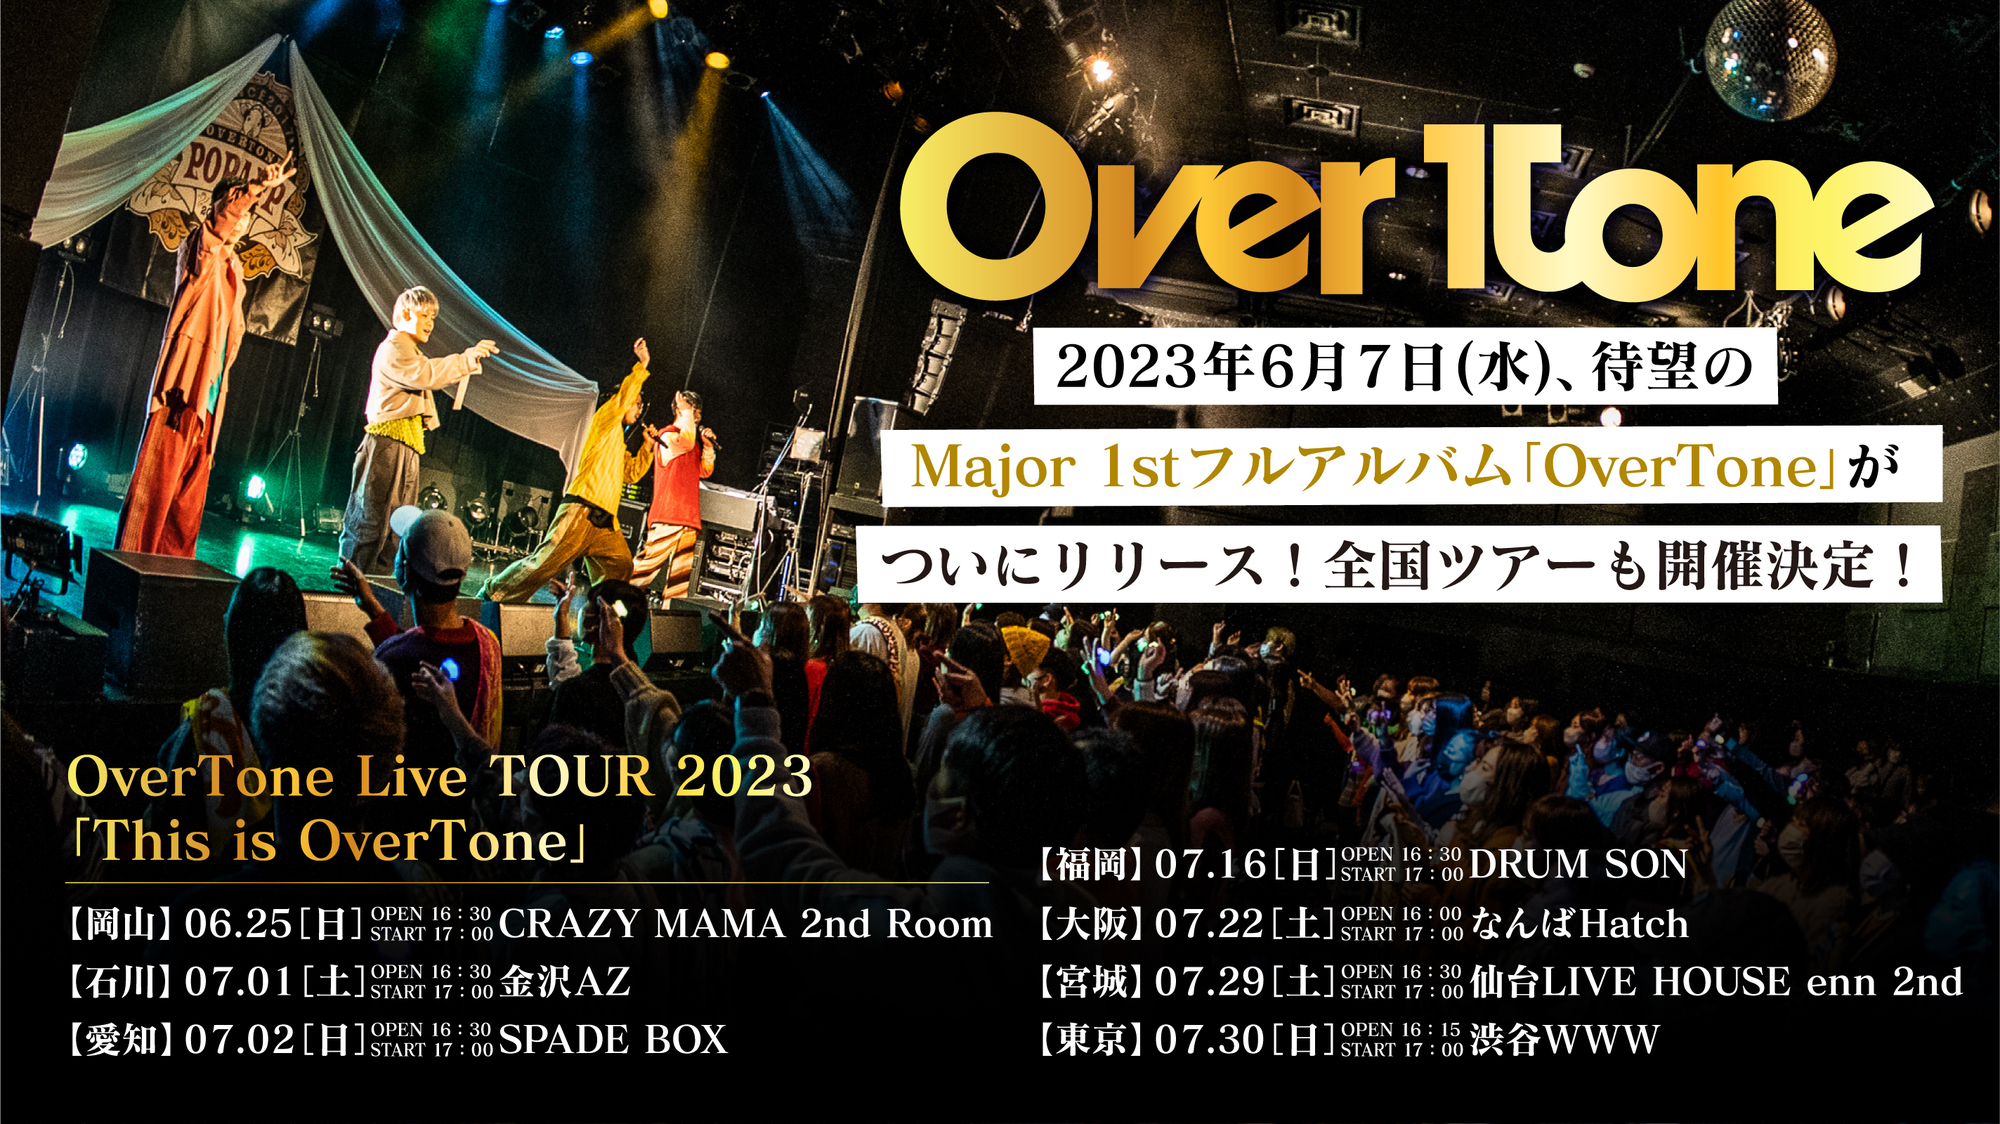 overtone live tour 2023